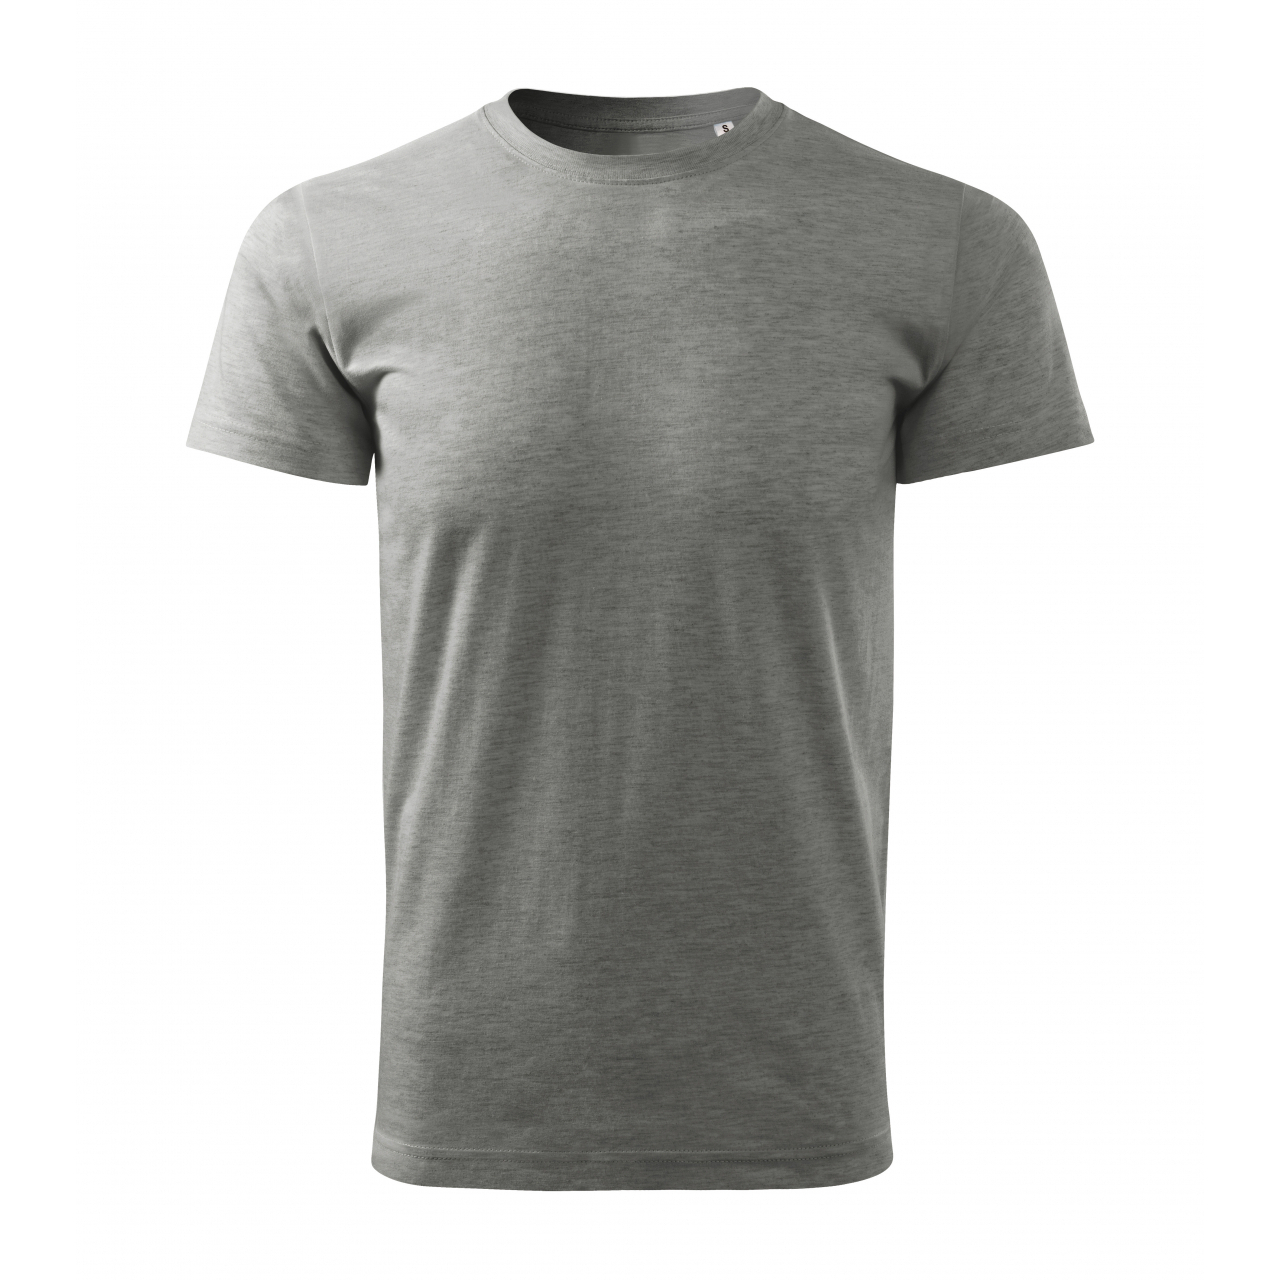 Tričko pánské Malfini Basic Free - šedé, XL